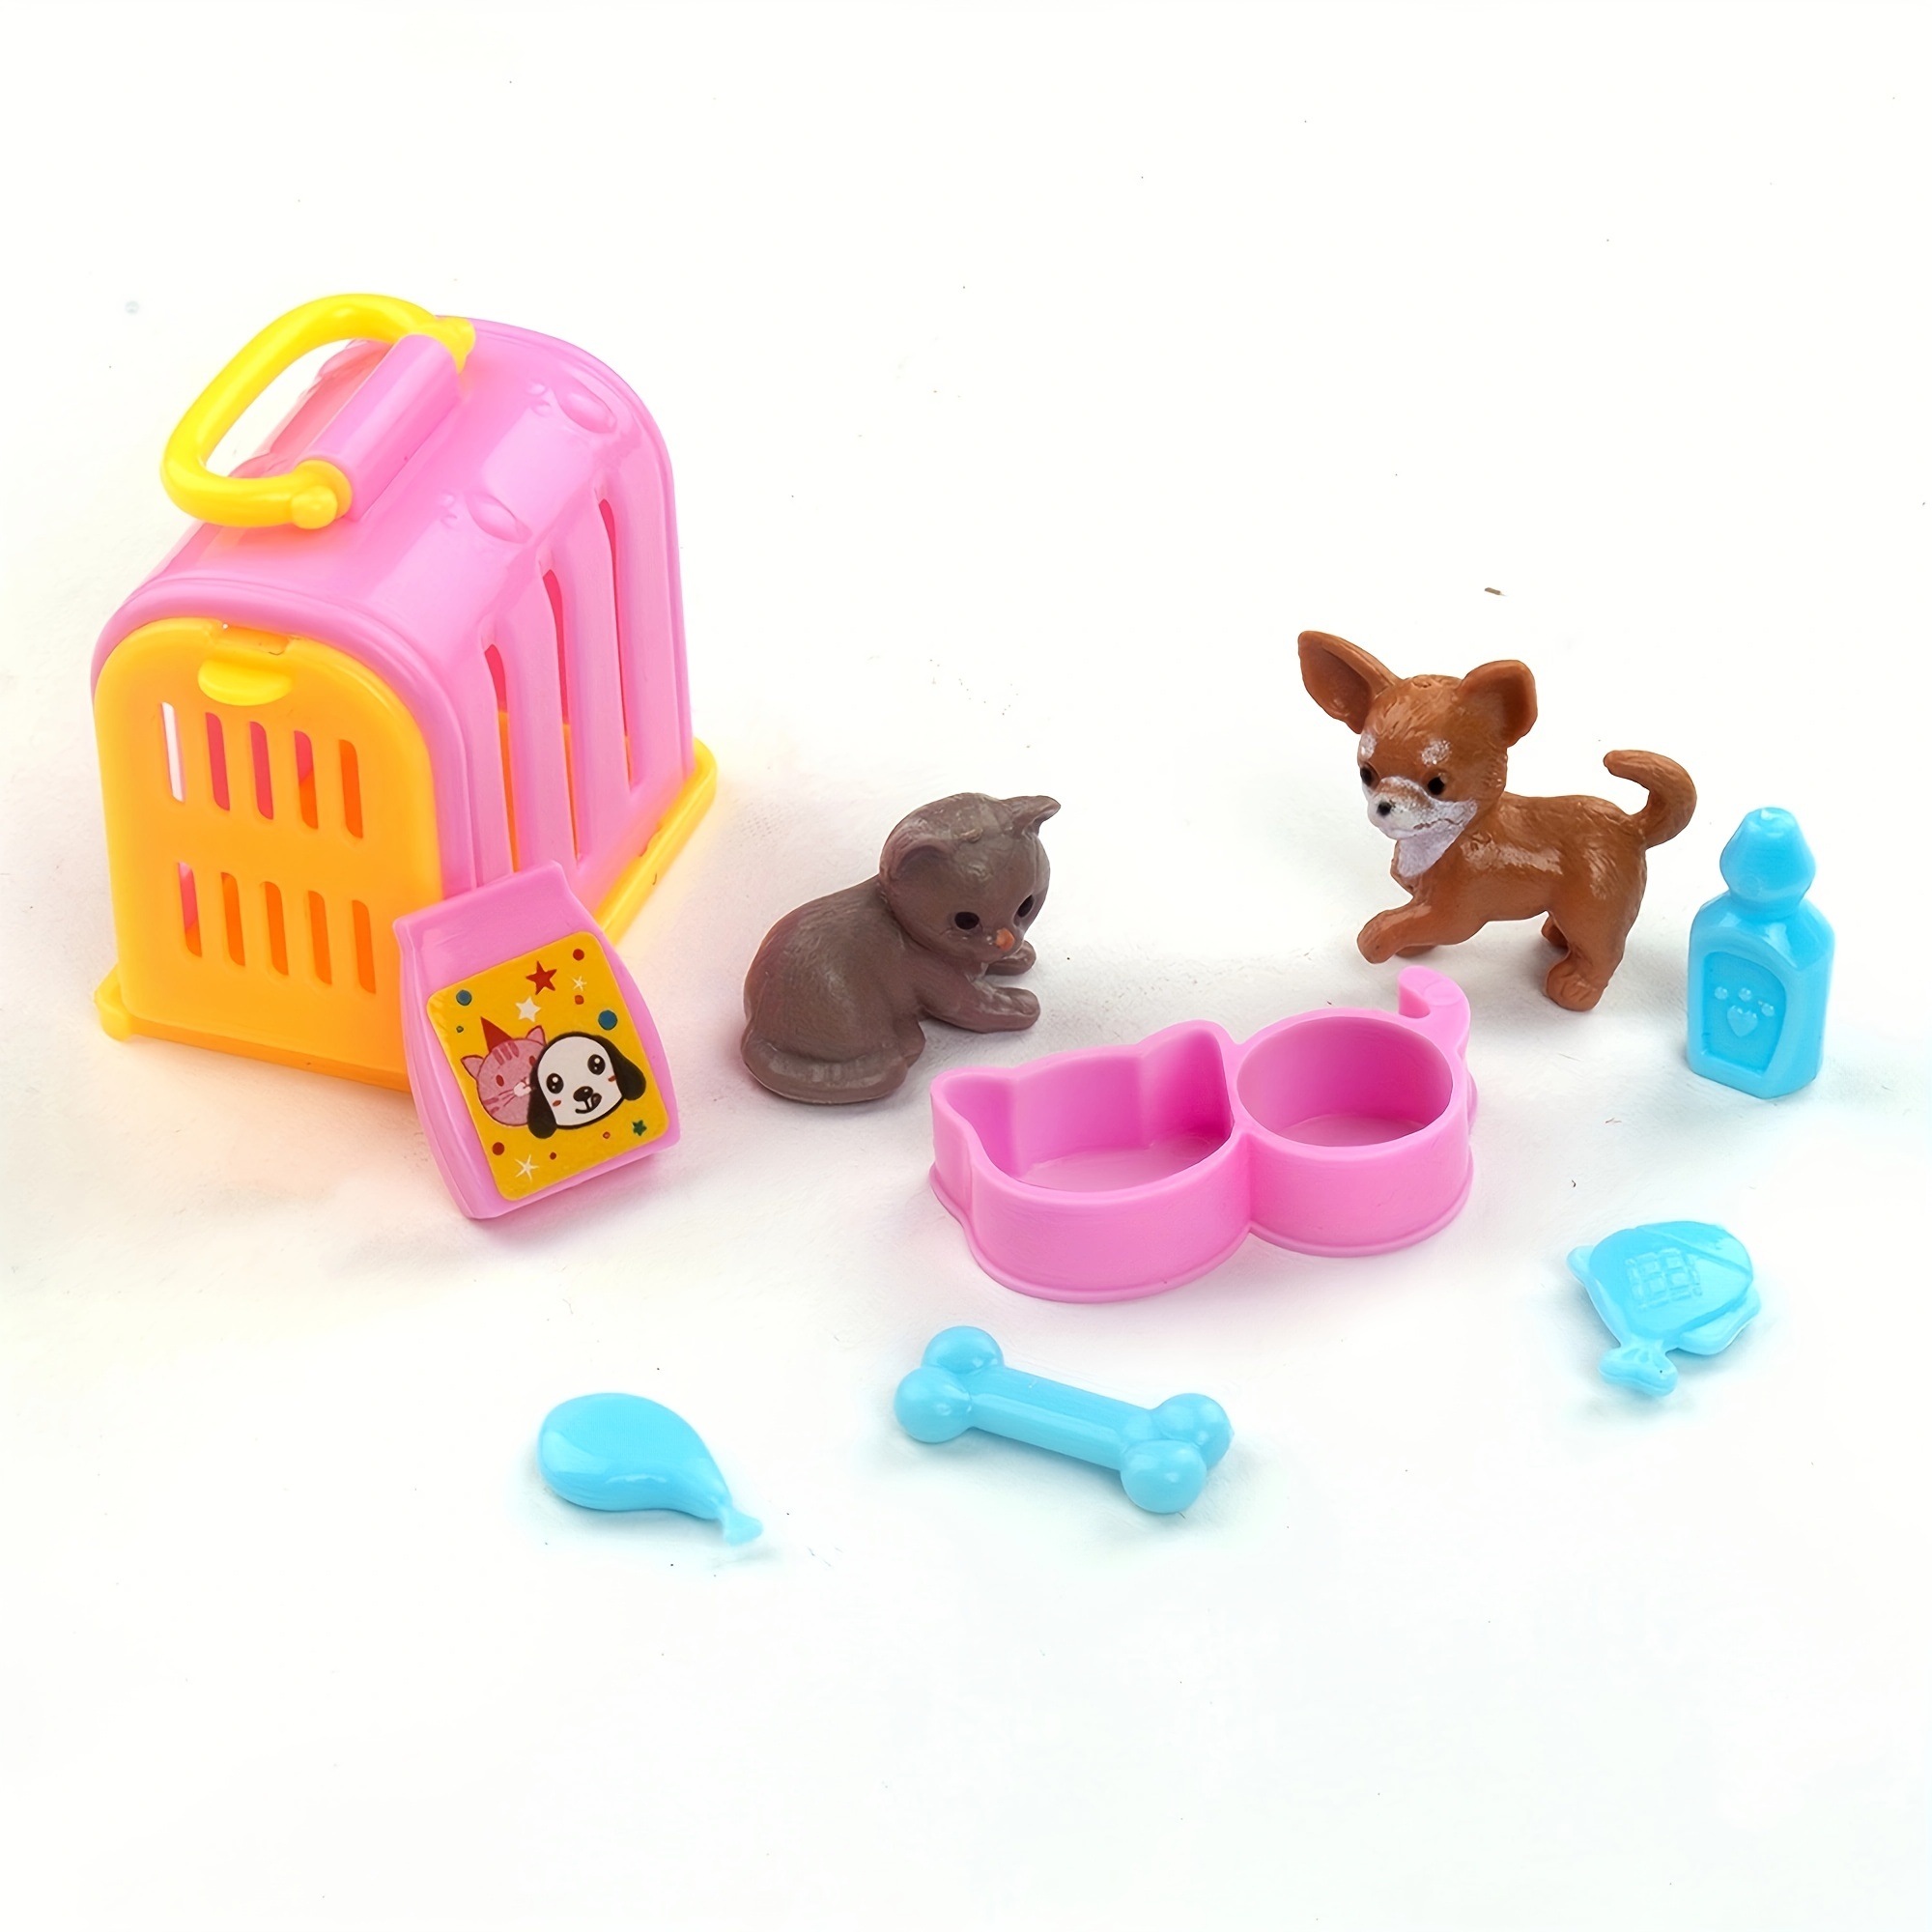 Littlest Pet Shop Mini Bathroom Playset 